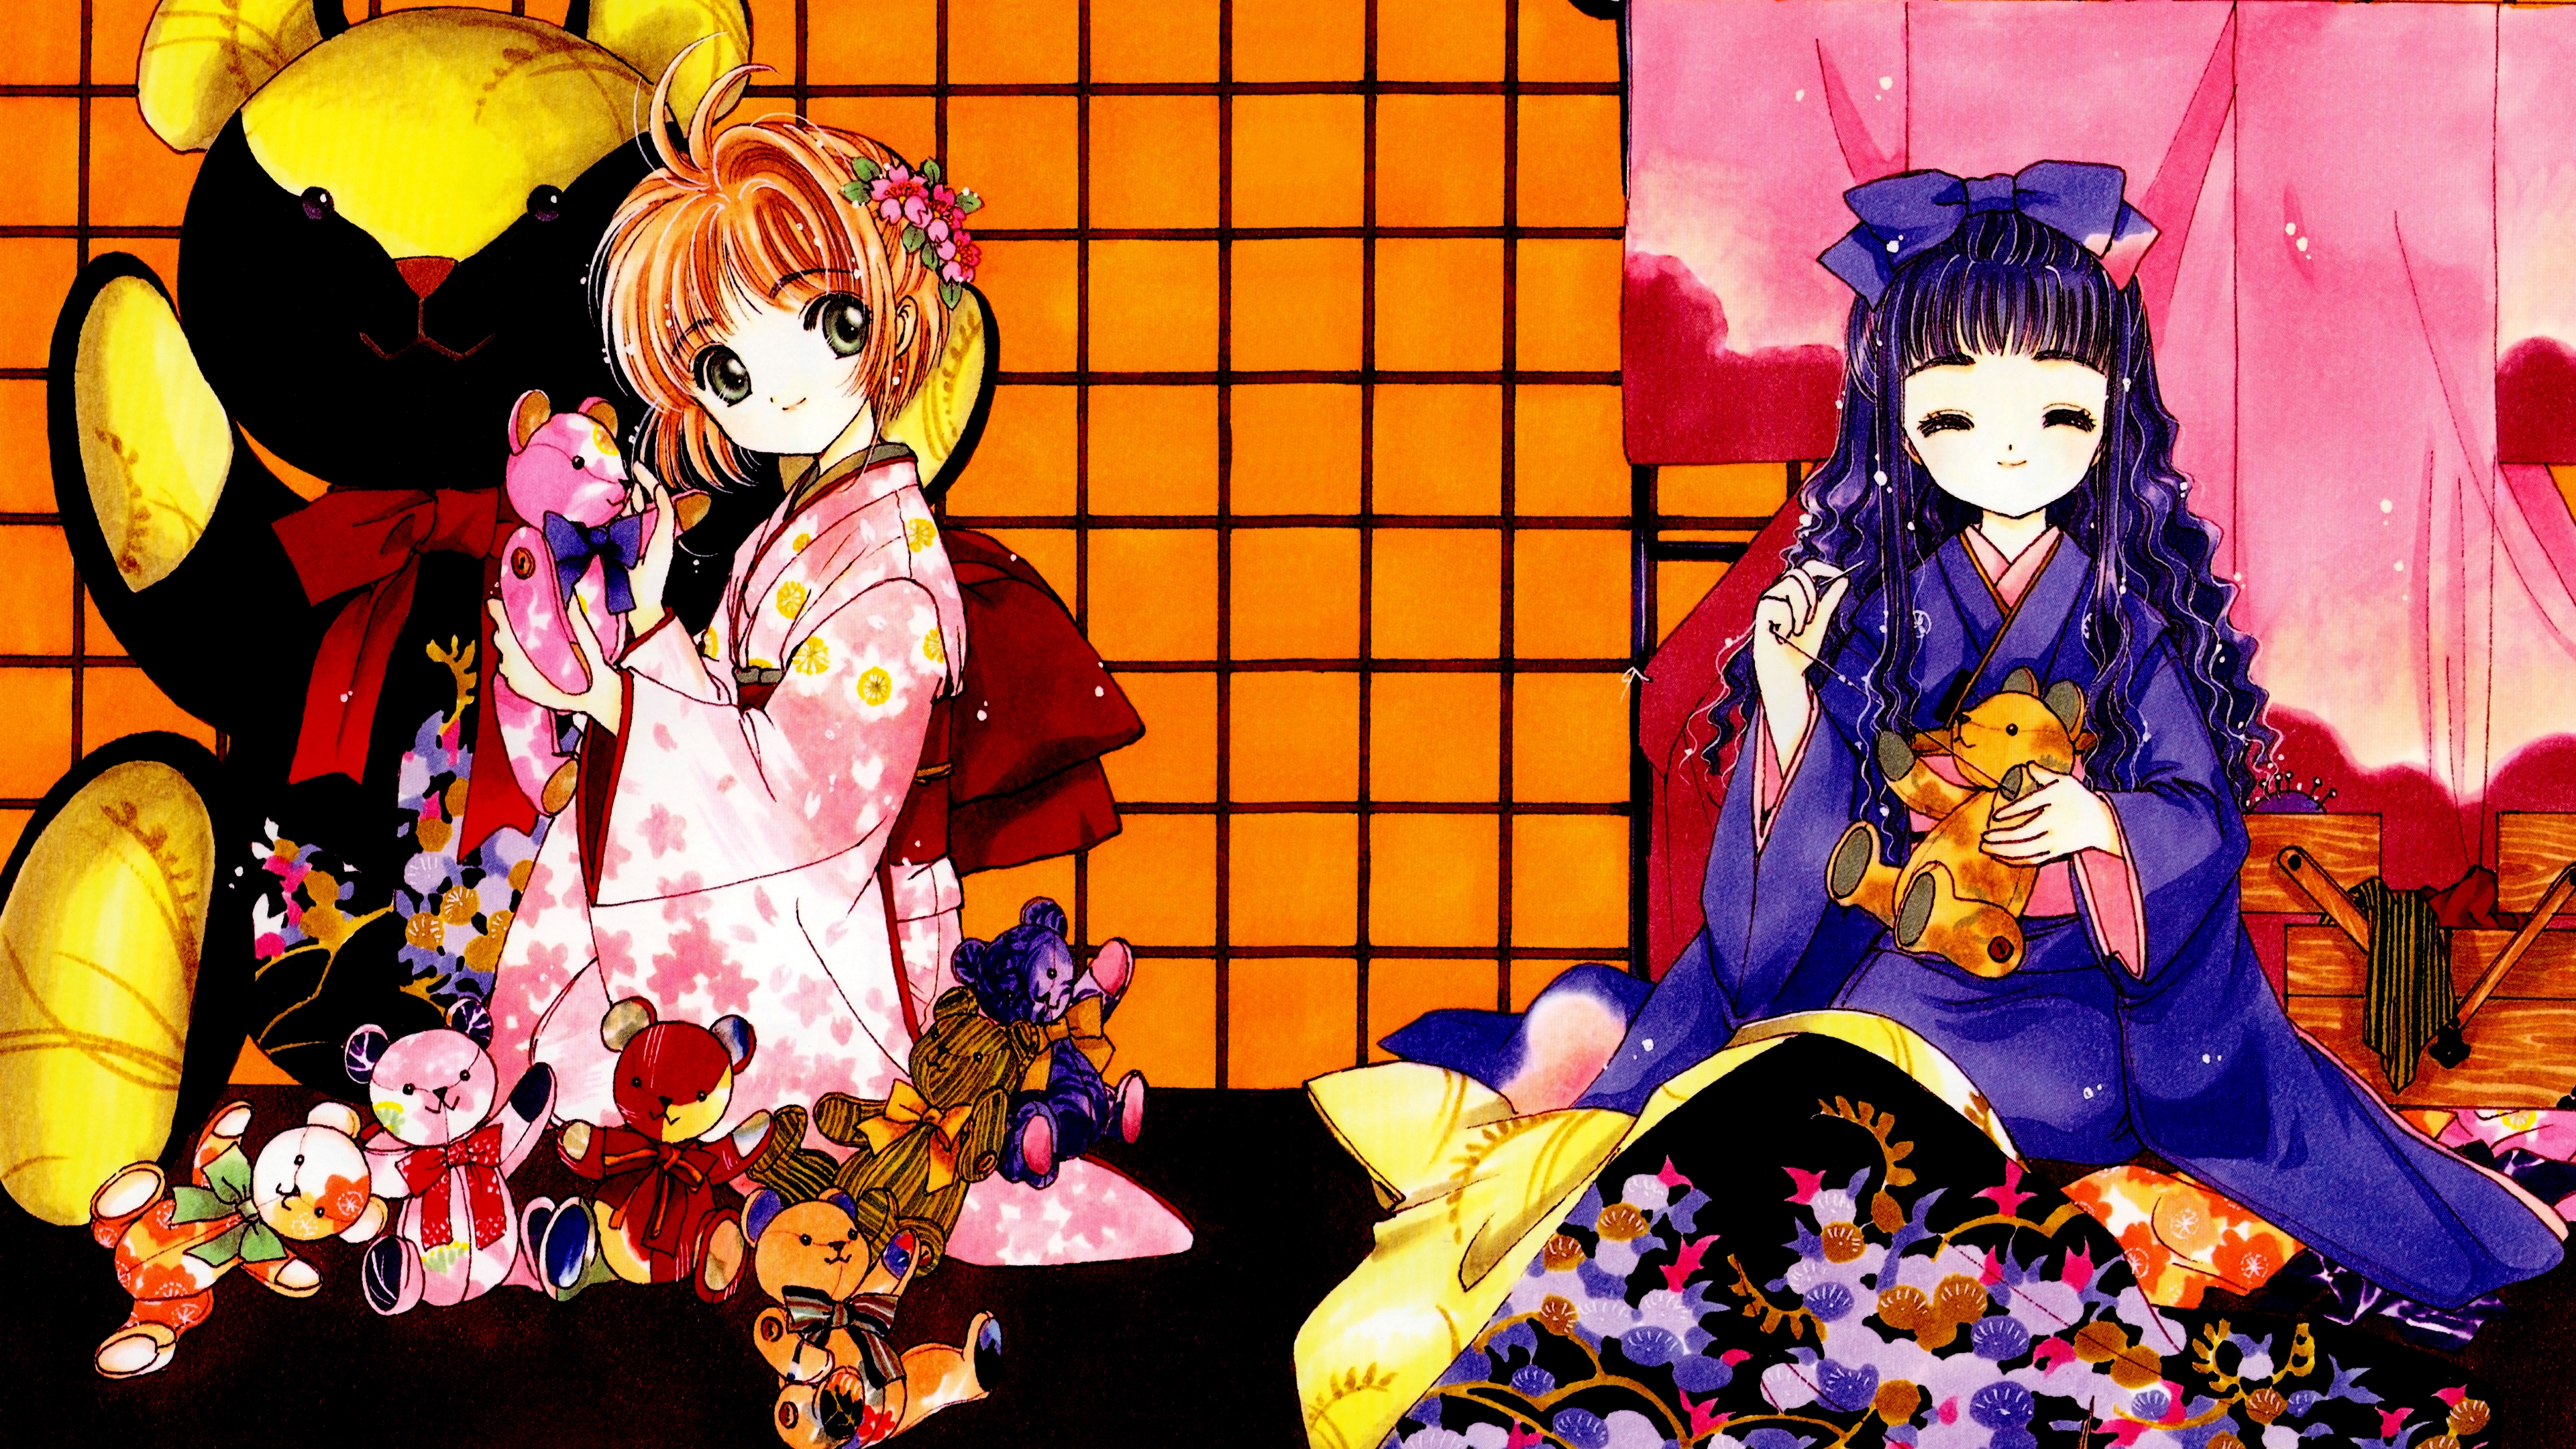 Anime 3840x2160 Cardcaptor Sakura Sakura Kinomoto magical girls anime girls 4K kimono looking at viewer teddy bears flower in hair smiling